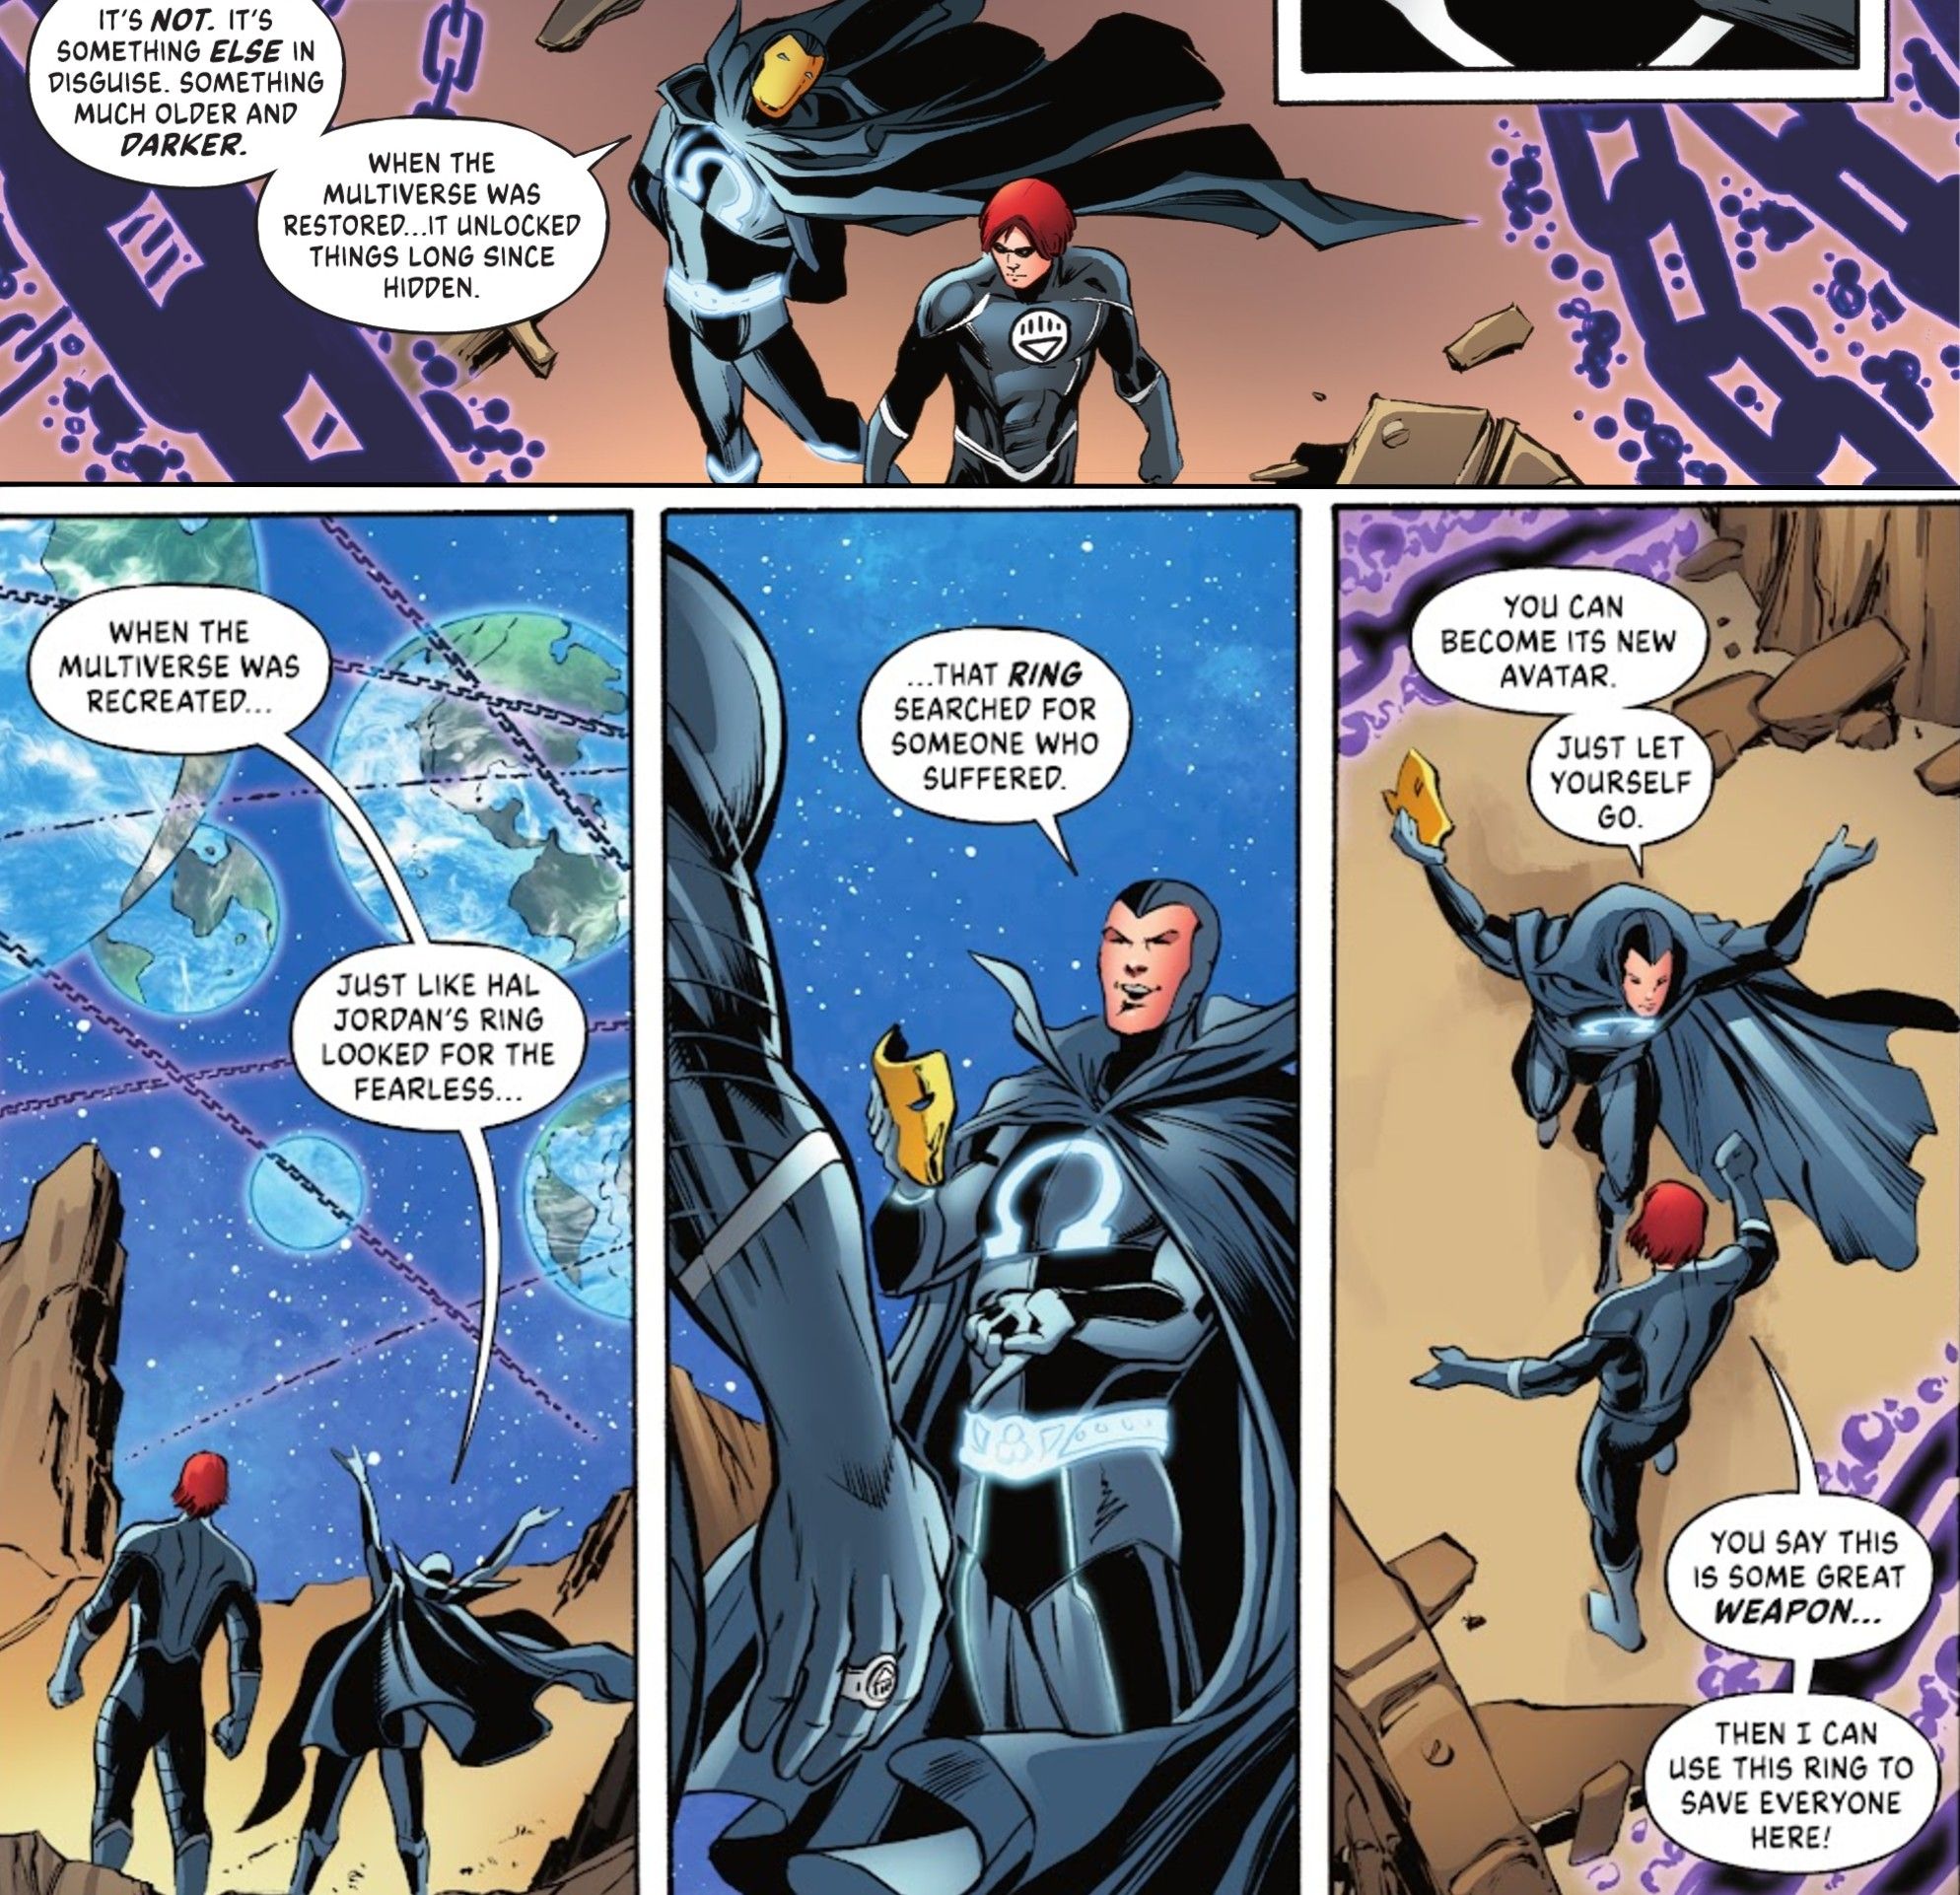 Darkseid’s Multiverse-Shaking Omega Lantern: True Origin Revealed